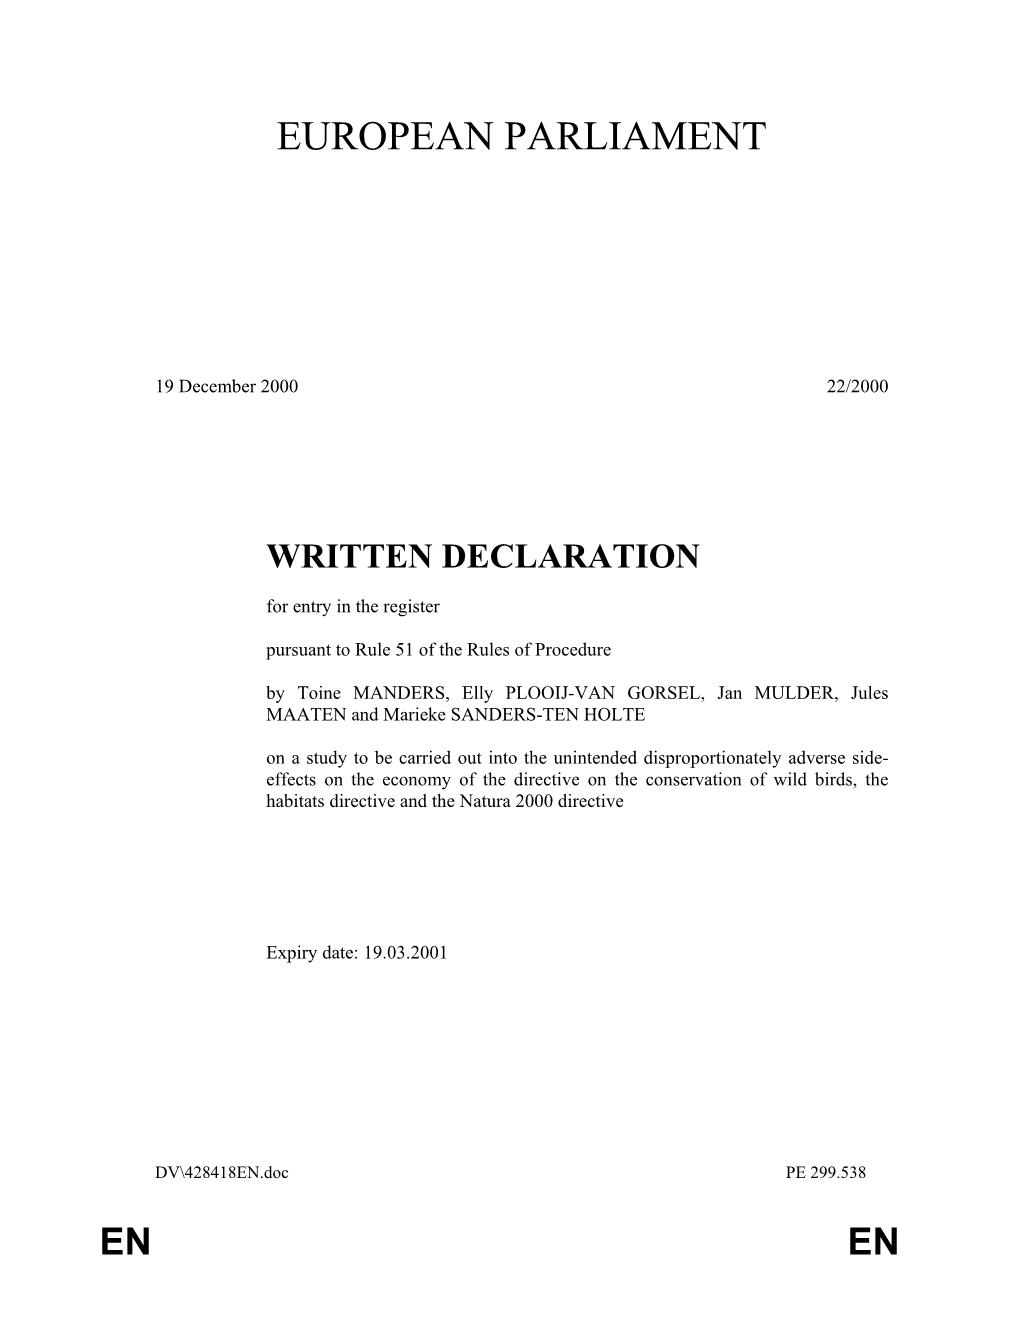 Written Declaration